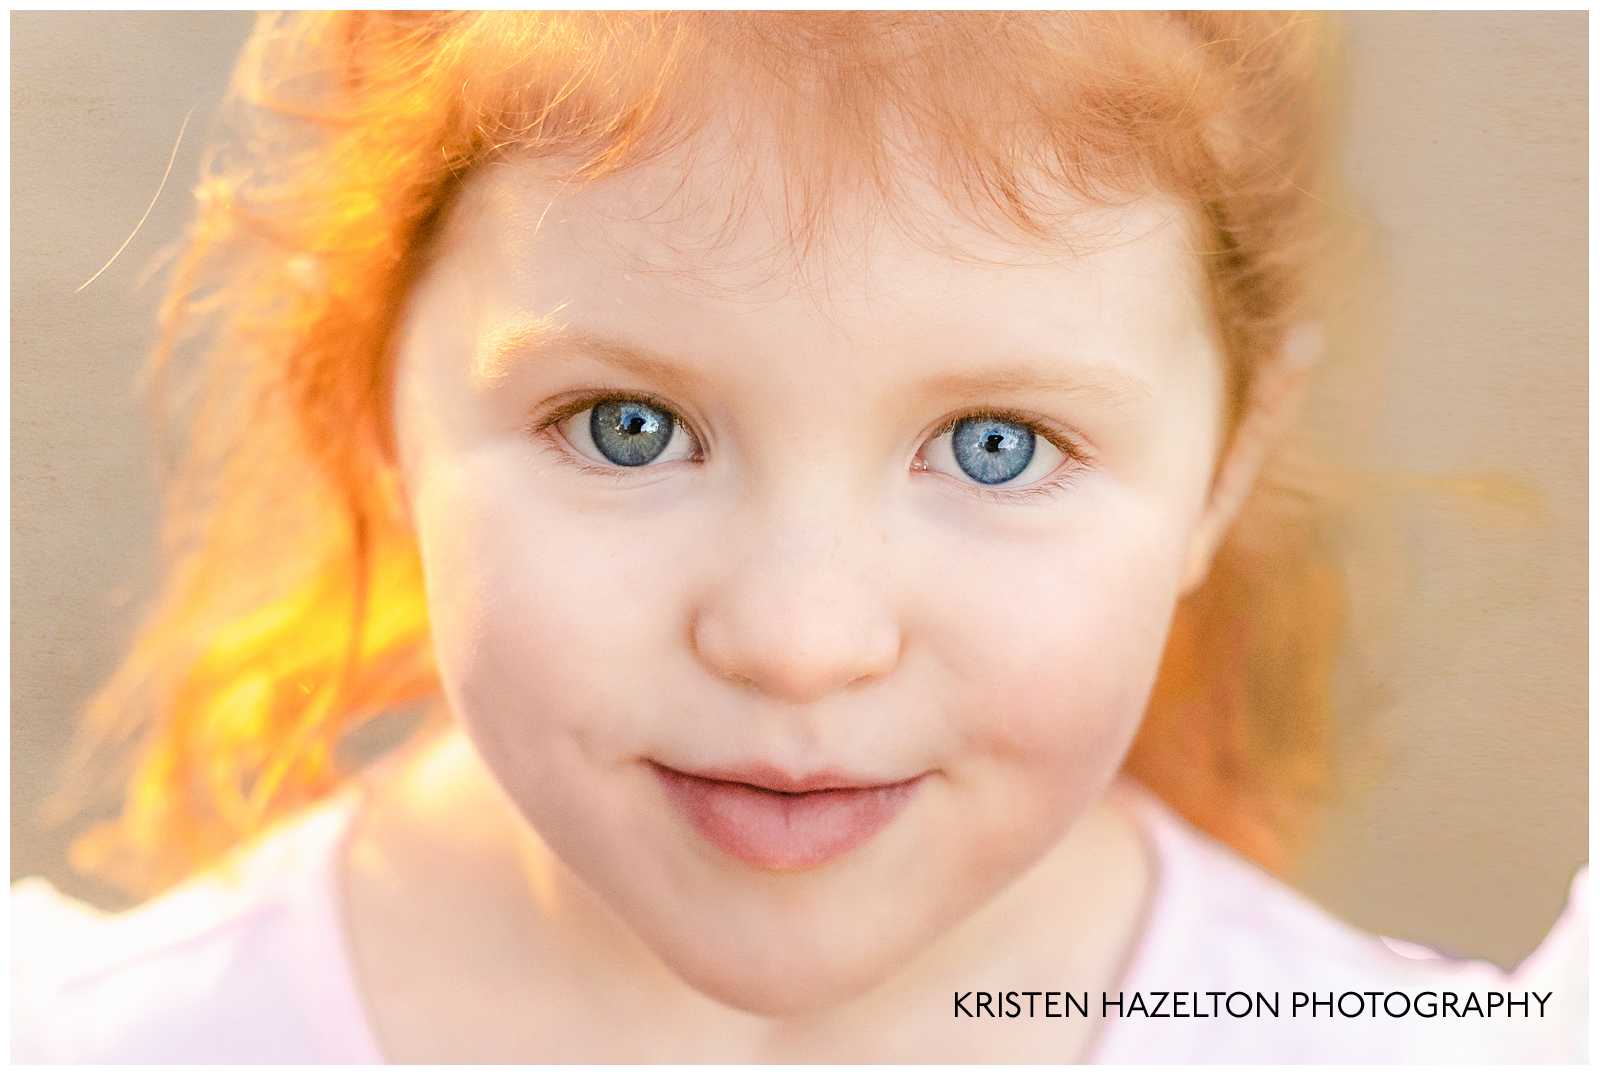 Closeup portrait of a red headed girl with heterochromia by photographer Kristen Hazelton